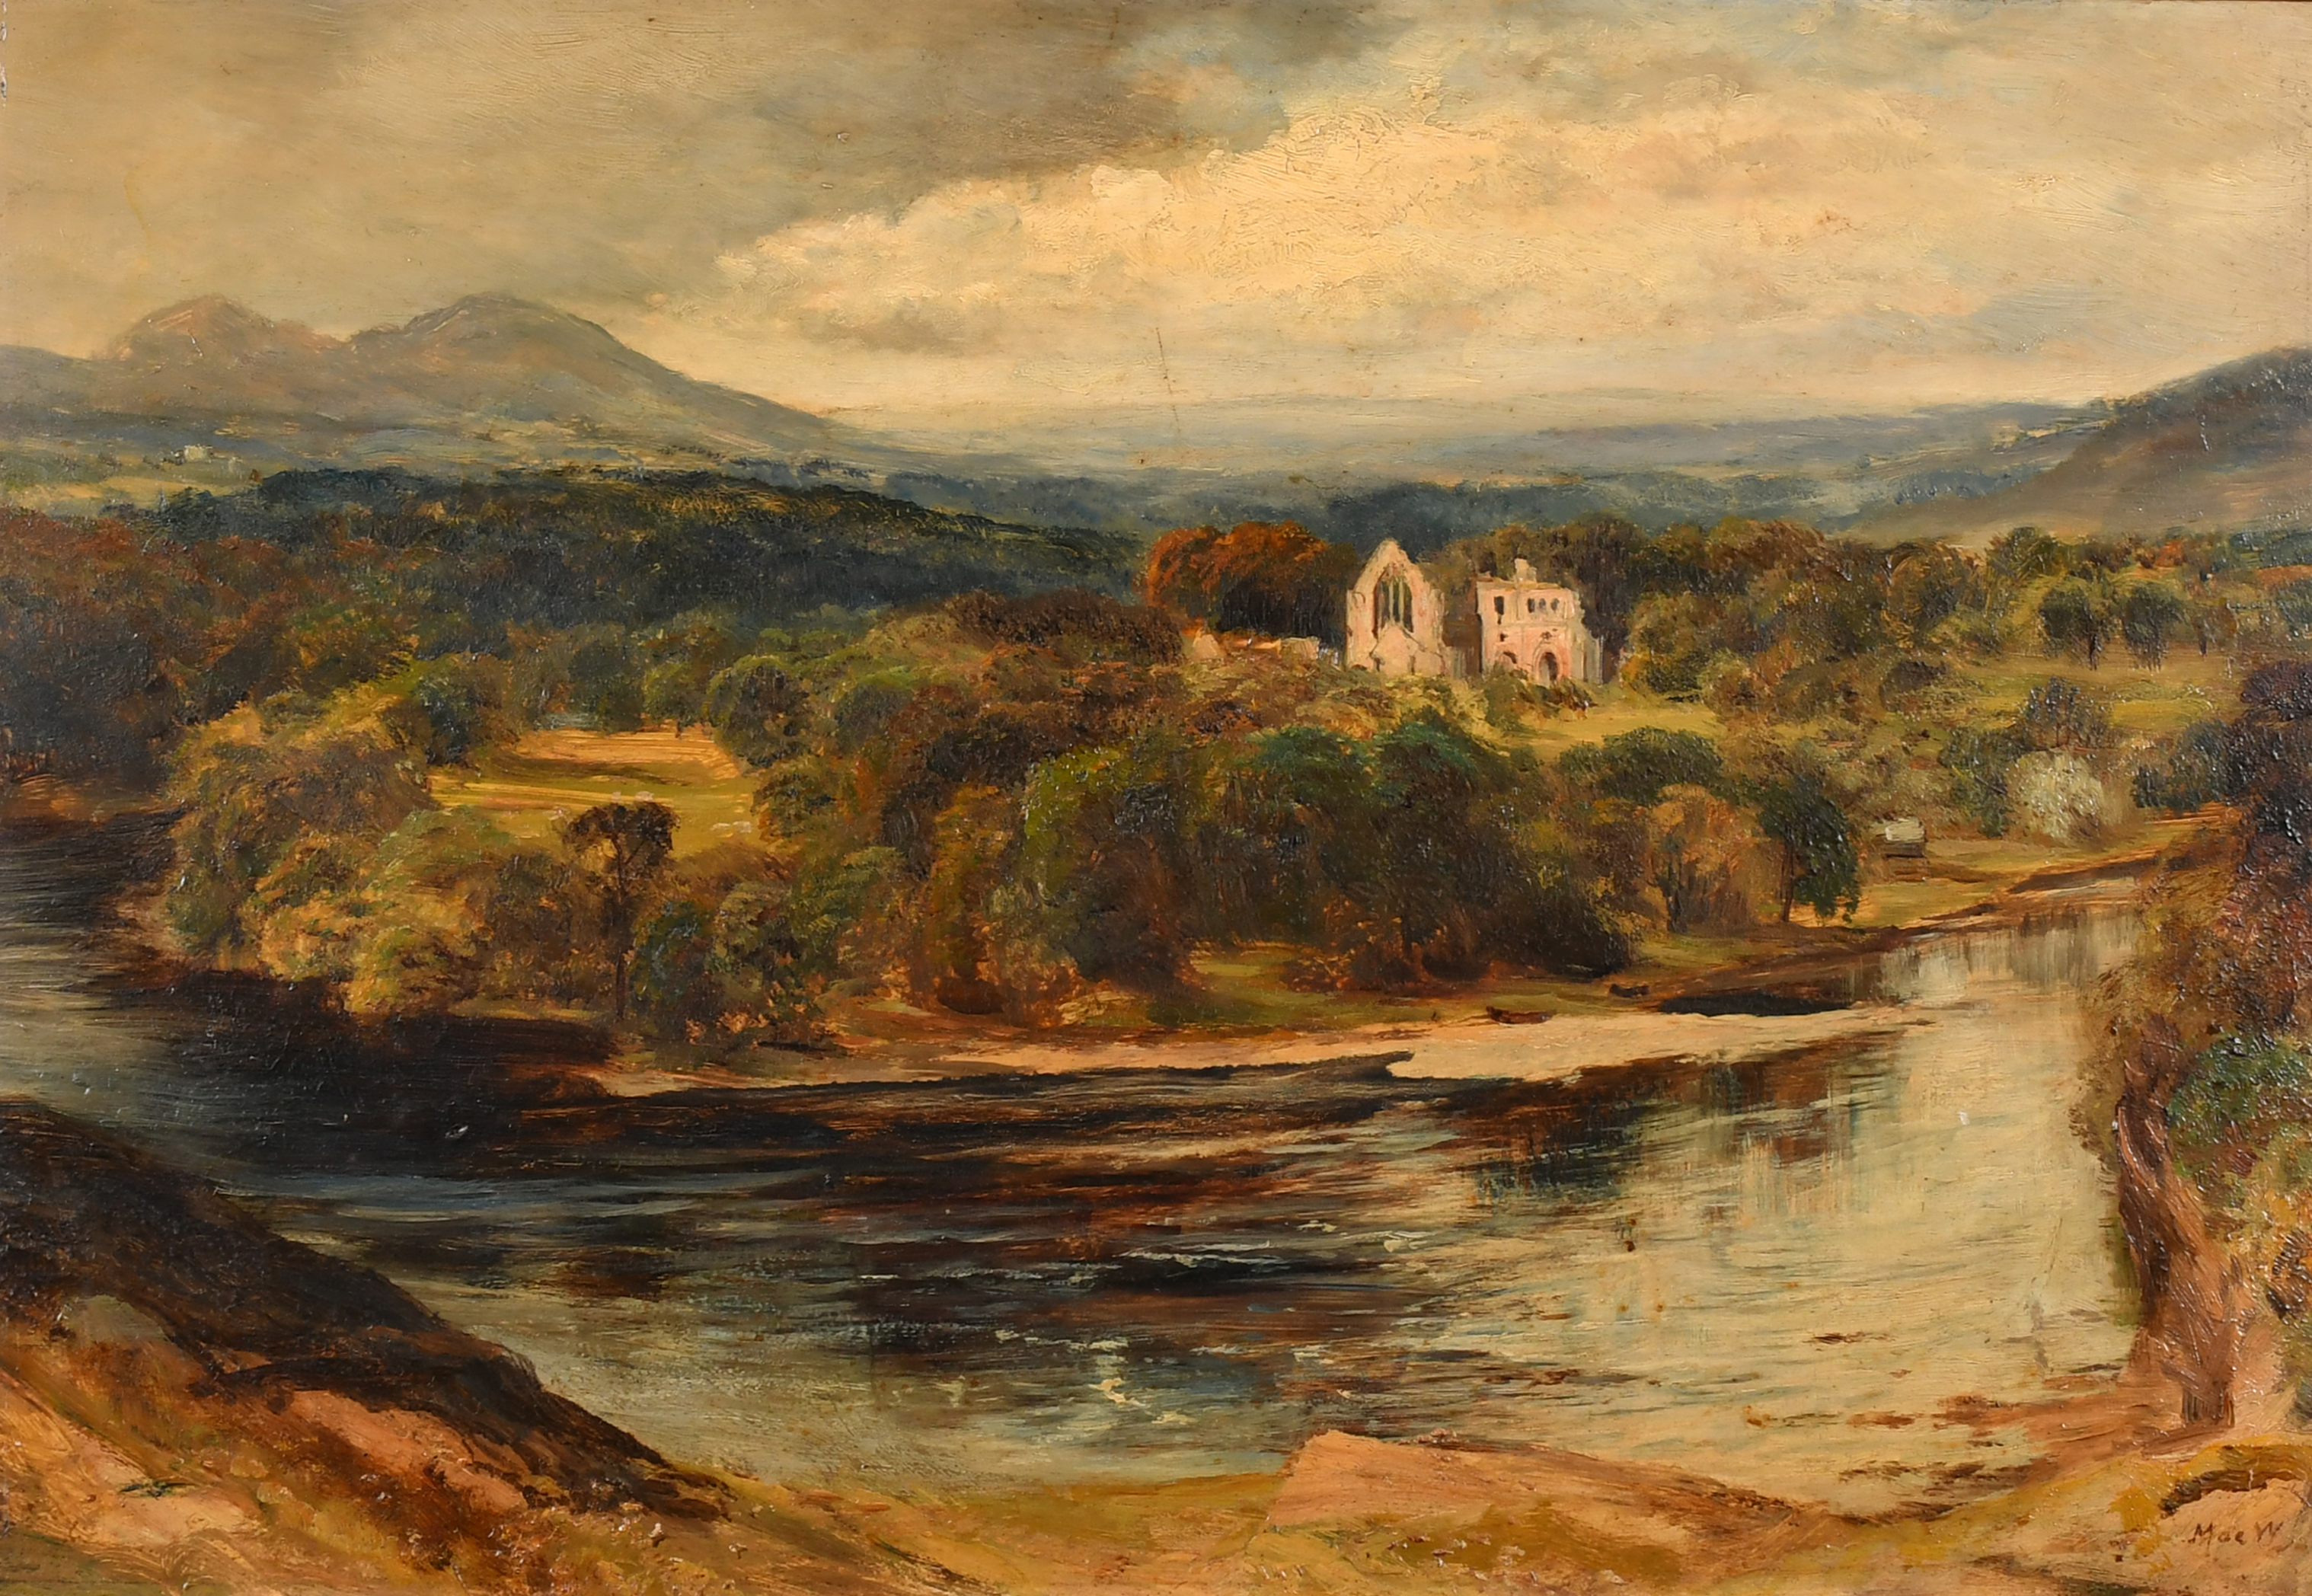 John MacWhirter (1839-1911) British. "Dryburgh Abbey" Scotland, Oil on panel, Signed, and